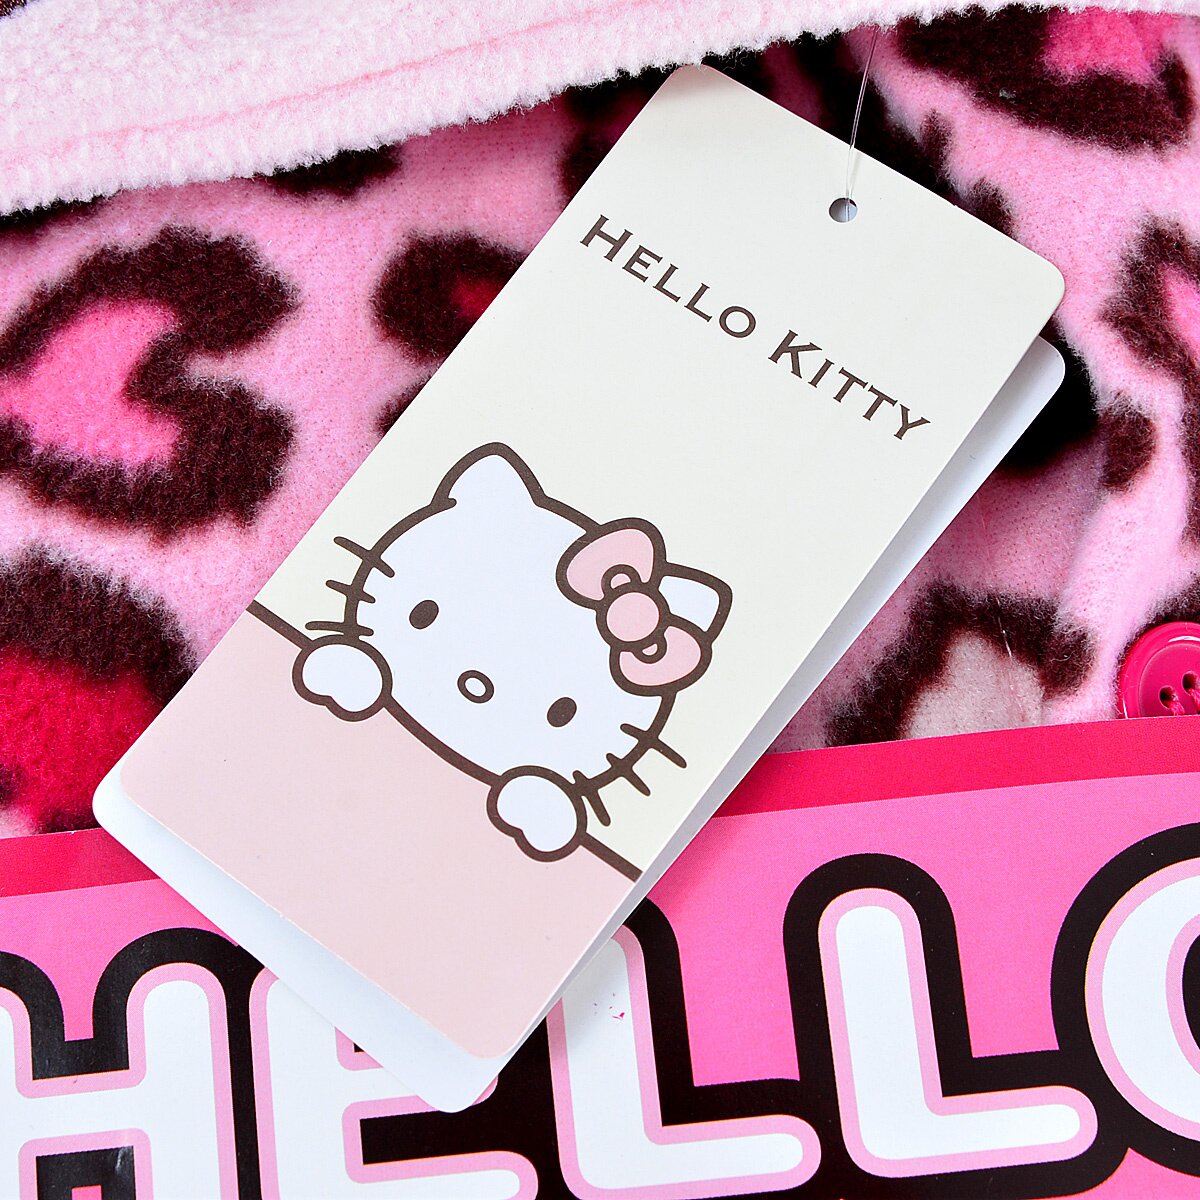 Hello Kitty Bizarre Products